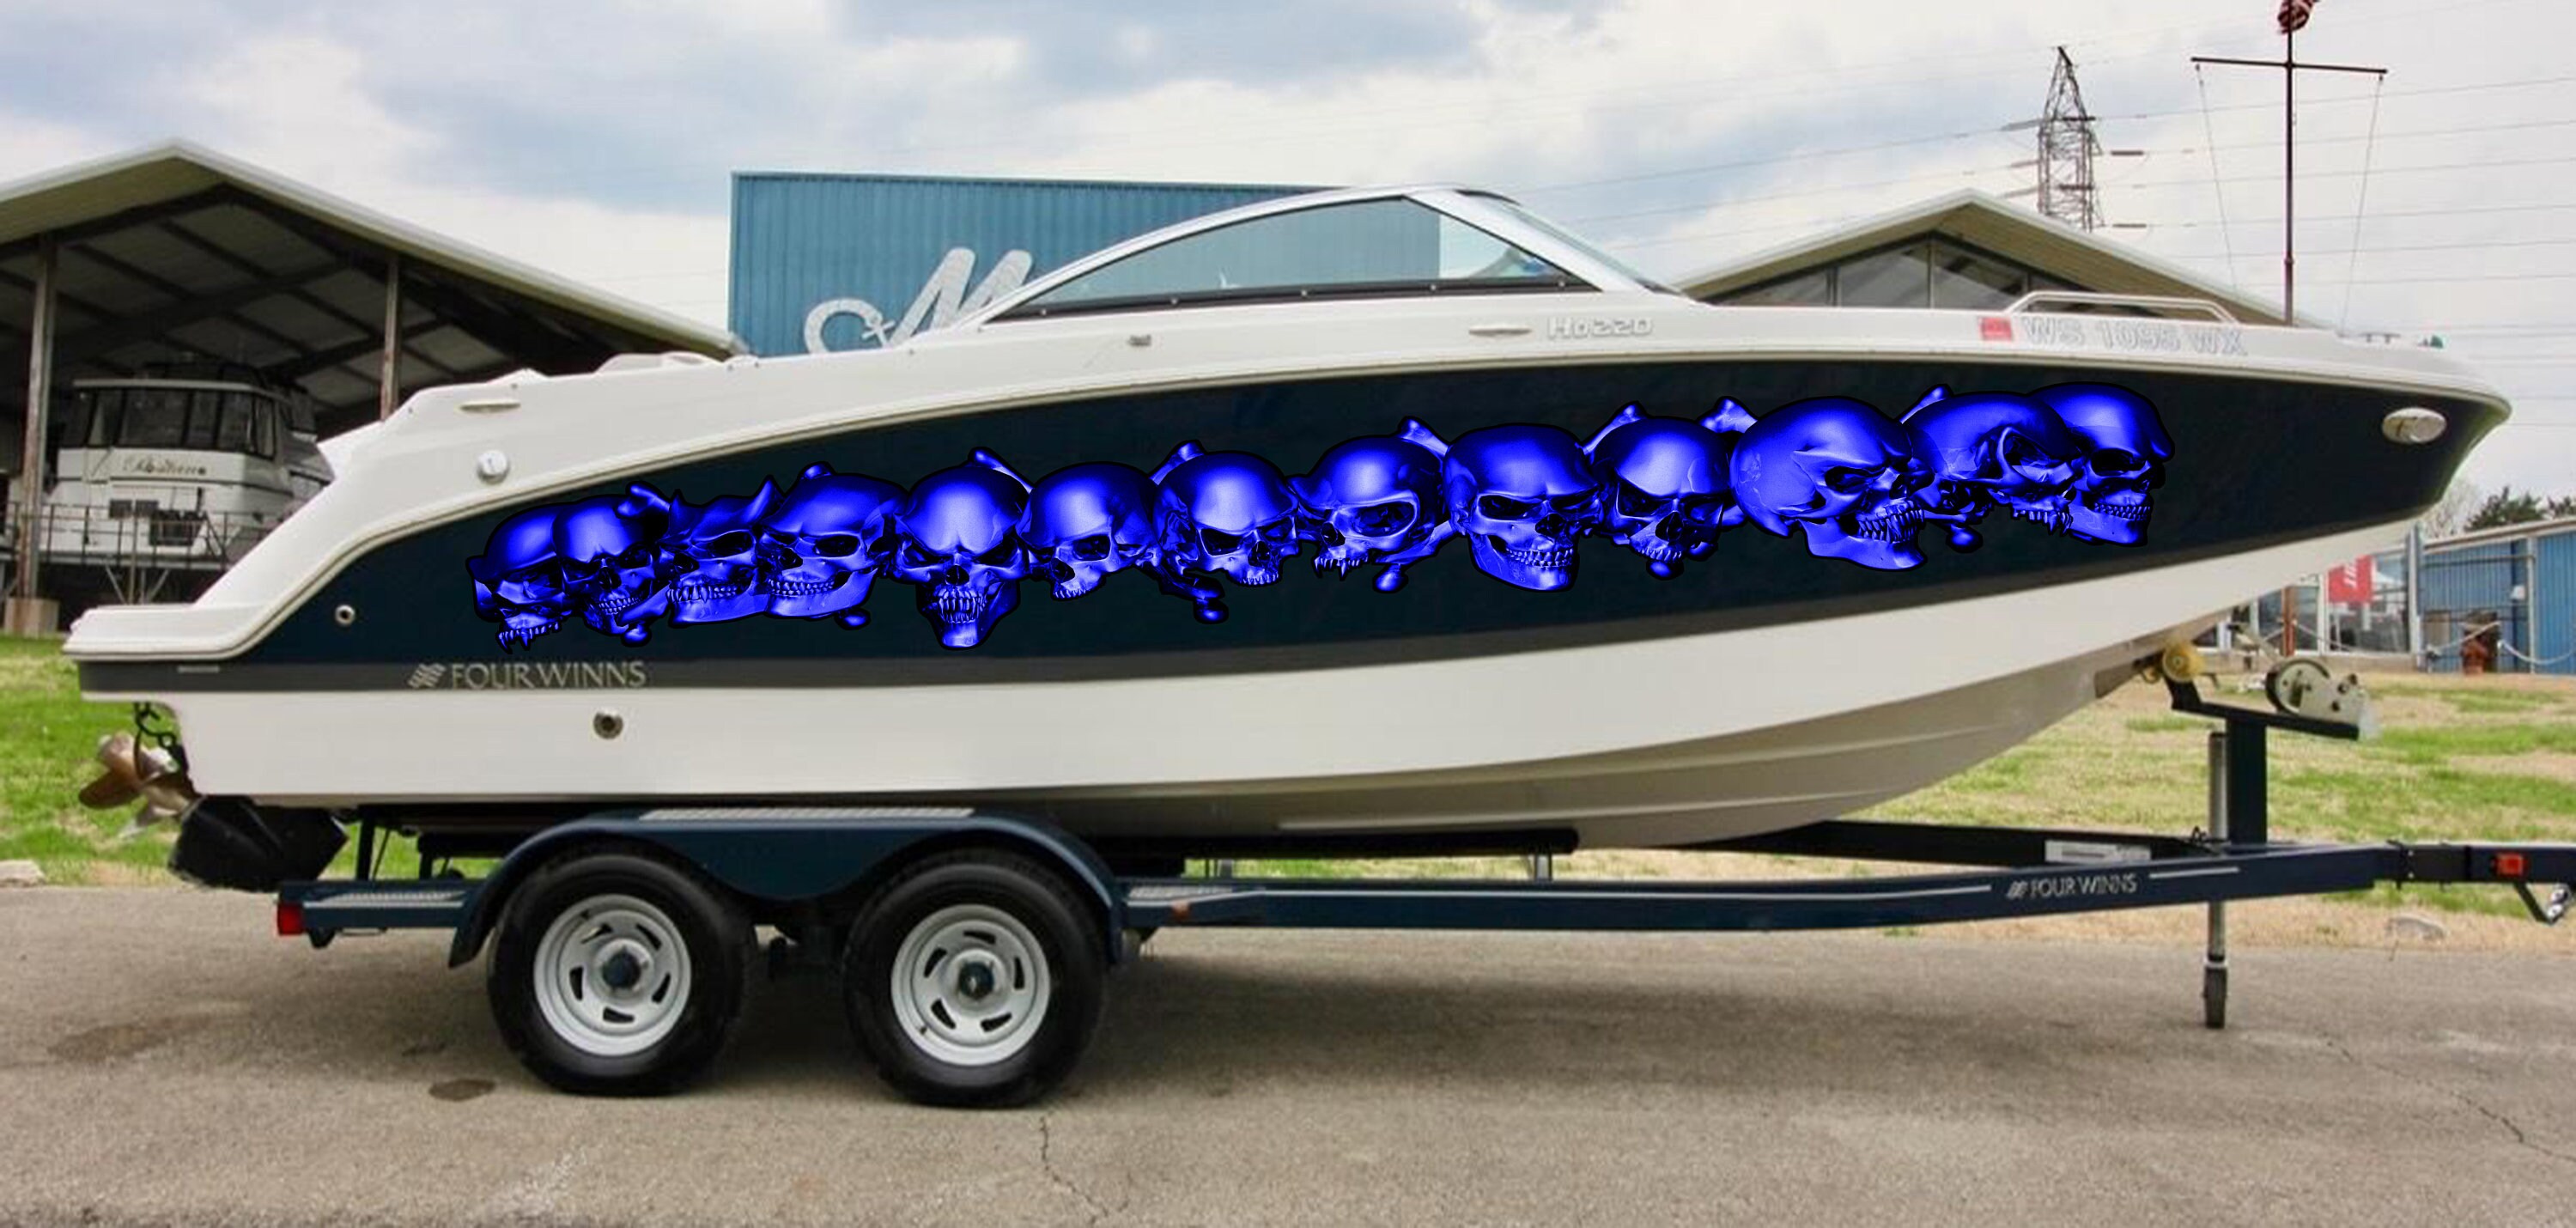 Full Color Speed Boat Skulls Automotive Vinyl Wraps, Pirate Skull